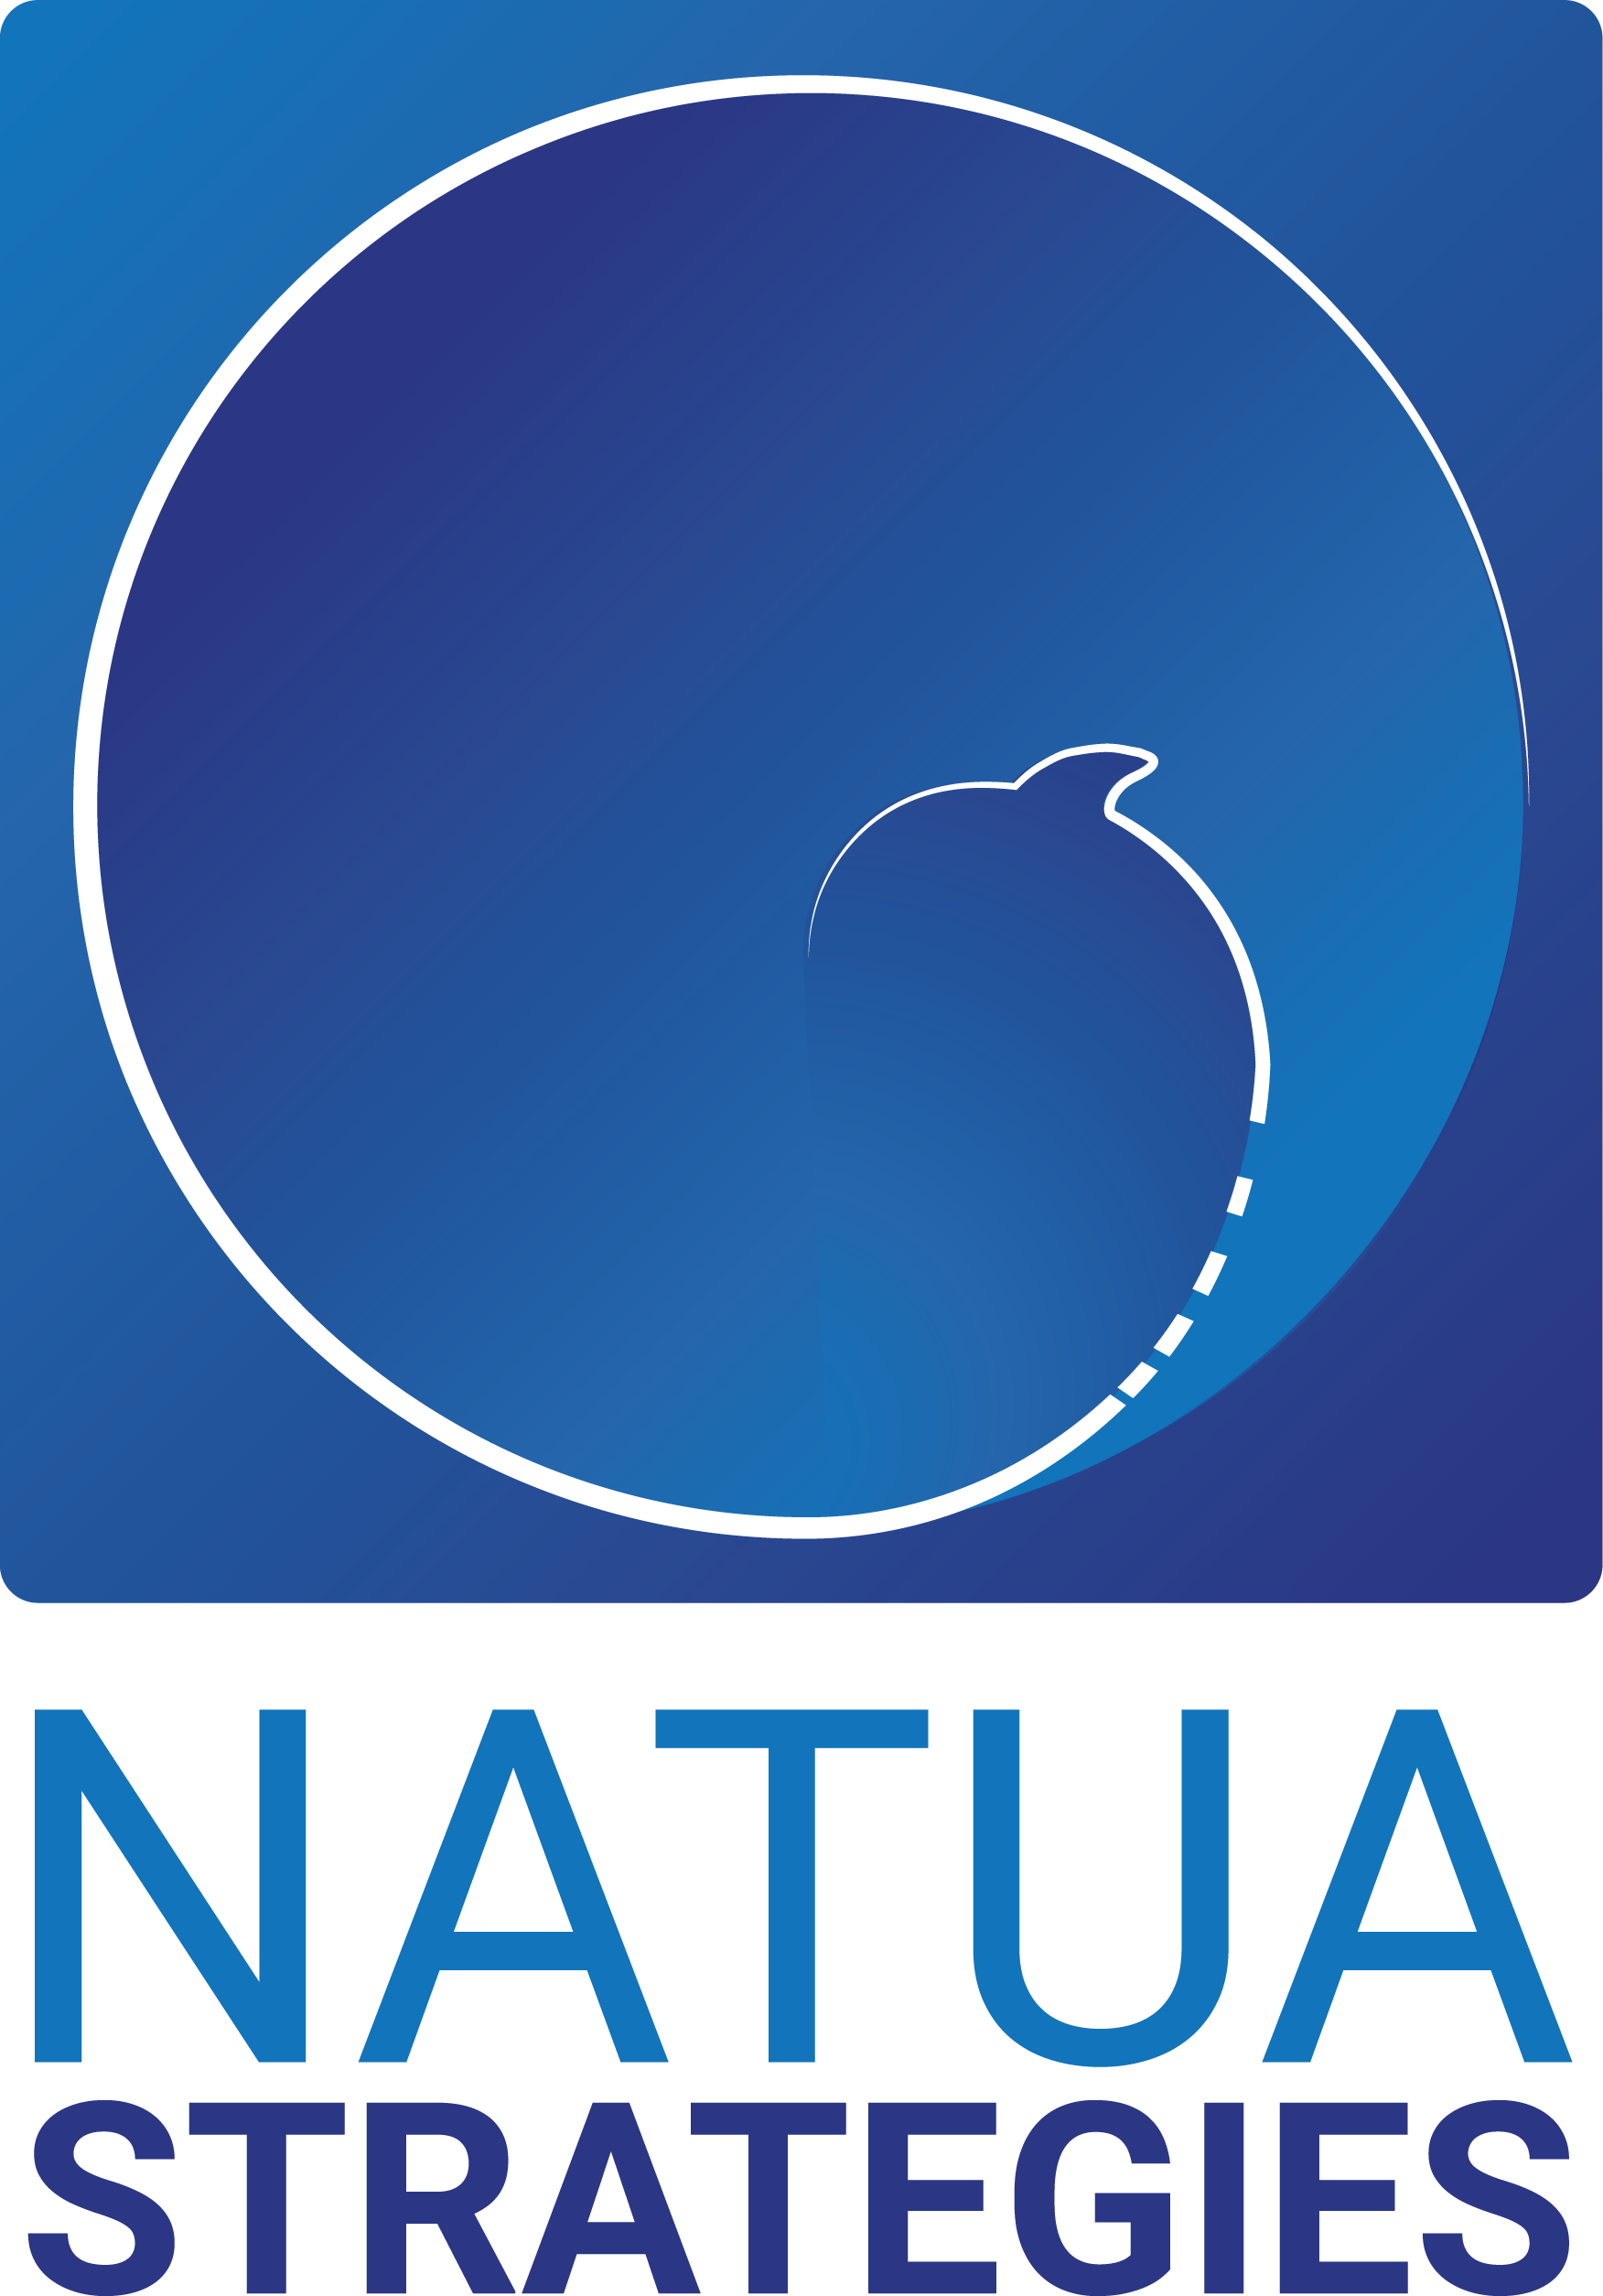 Natua Strategies Vertical Logo - 300dpi.png